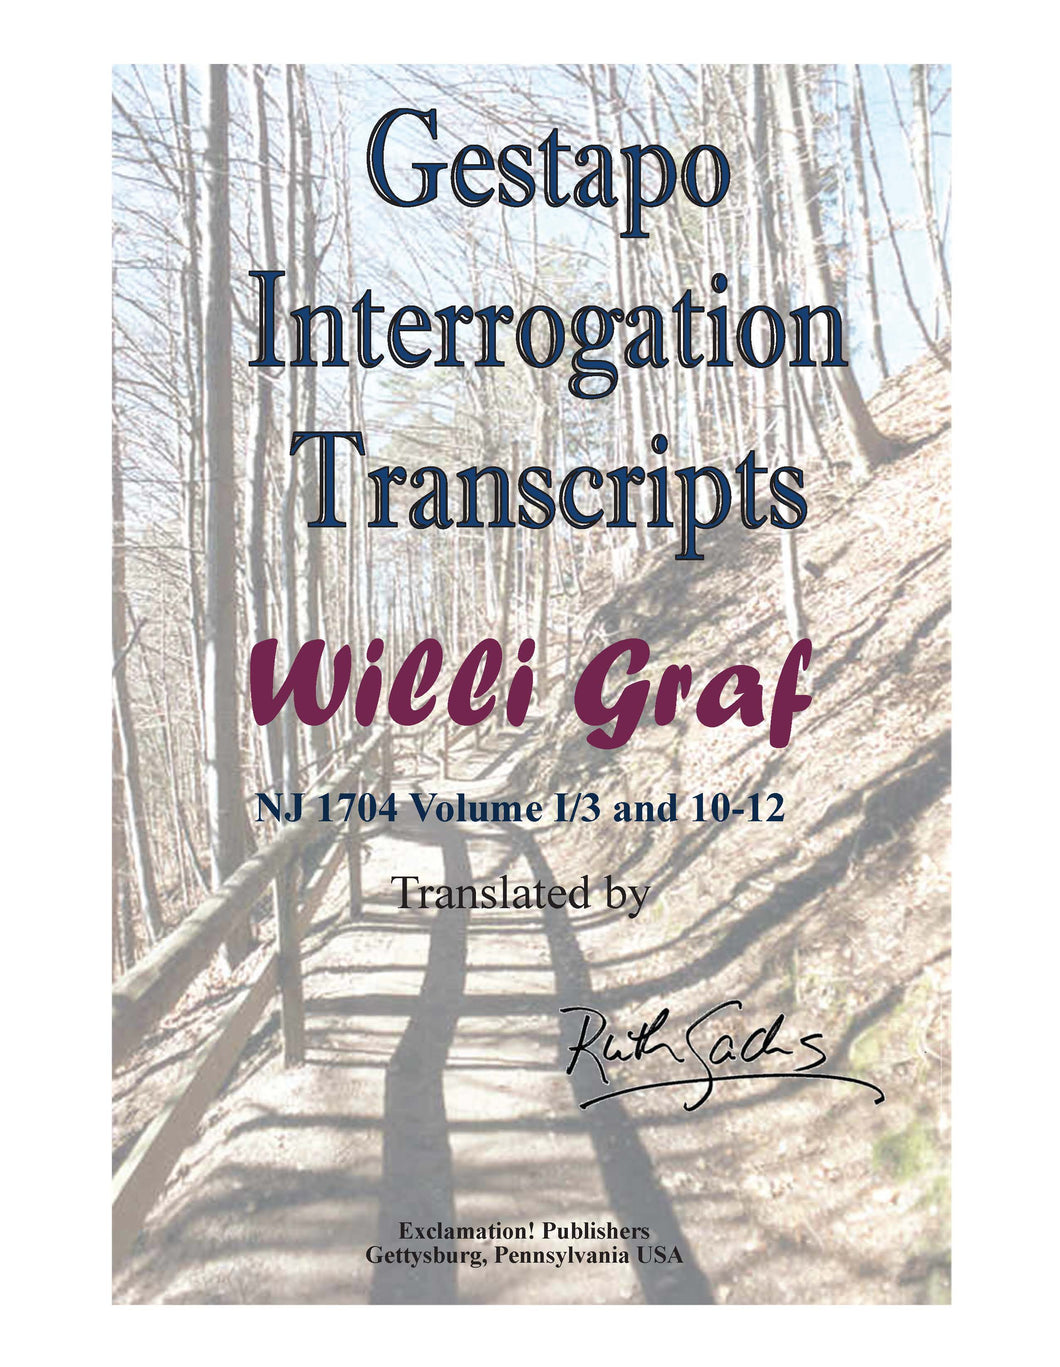 Gestapo Interrogation Transcripts: Willi Graf. NJ1704 Volume I/4, 10-12.